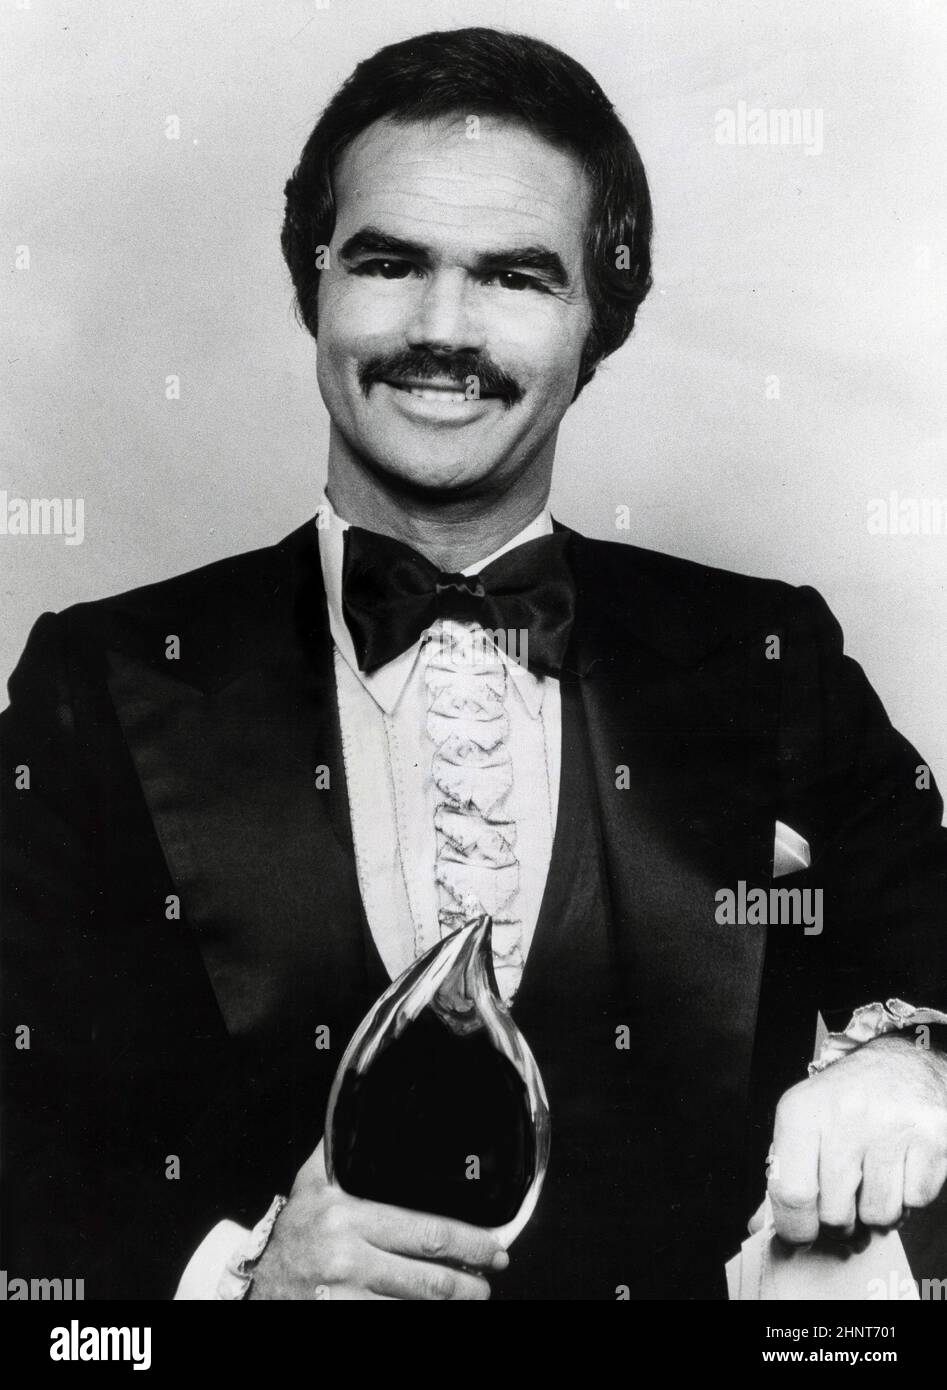 Burt Reynolds Photo by Adam Scull/PHOTOlink Stock Photo